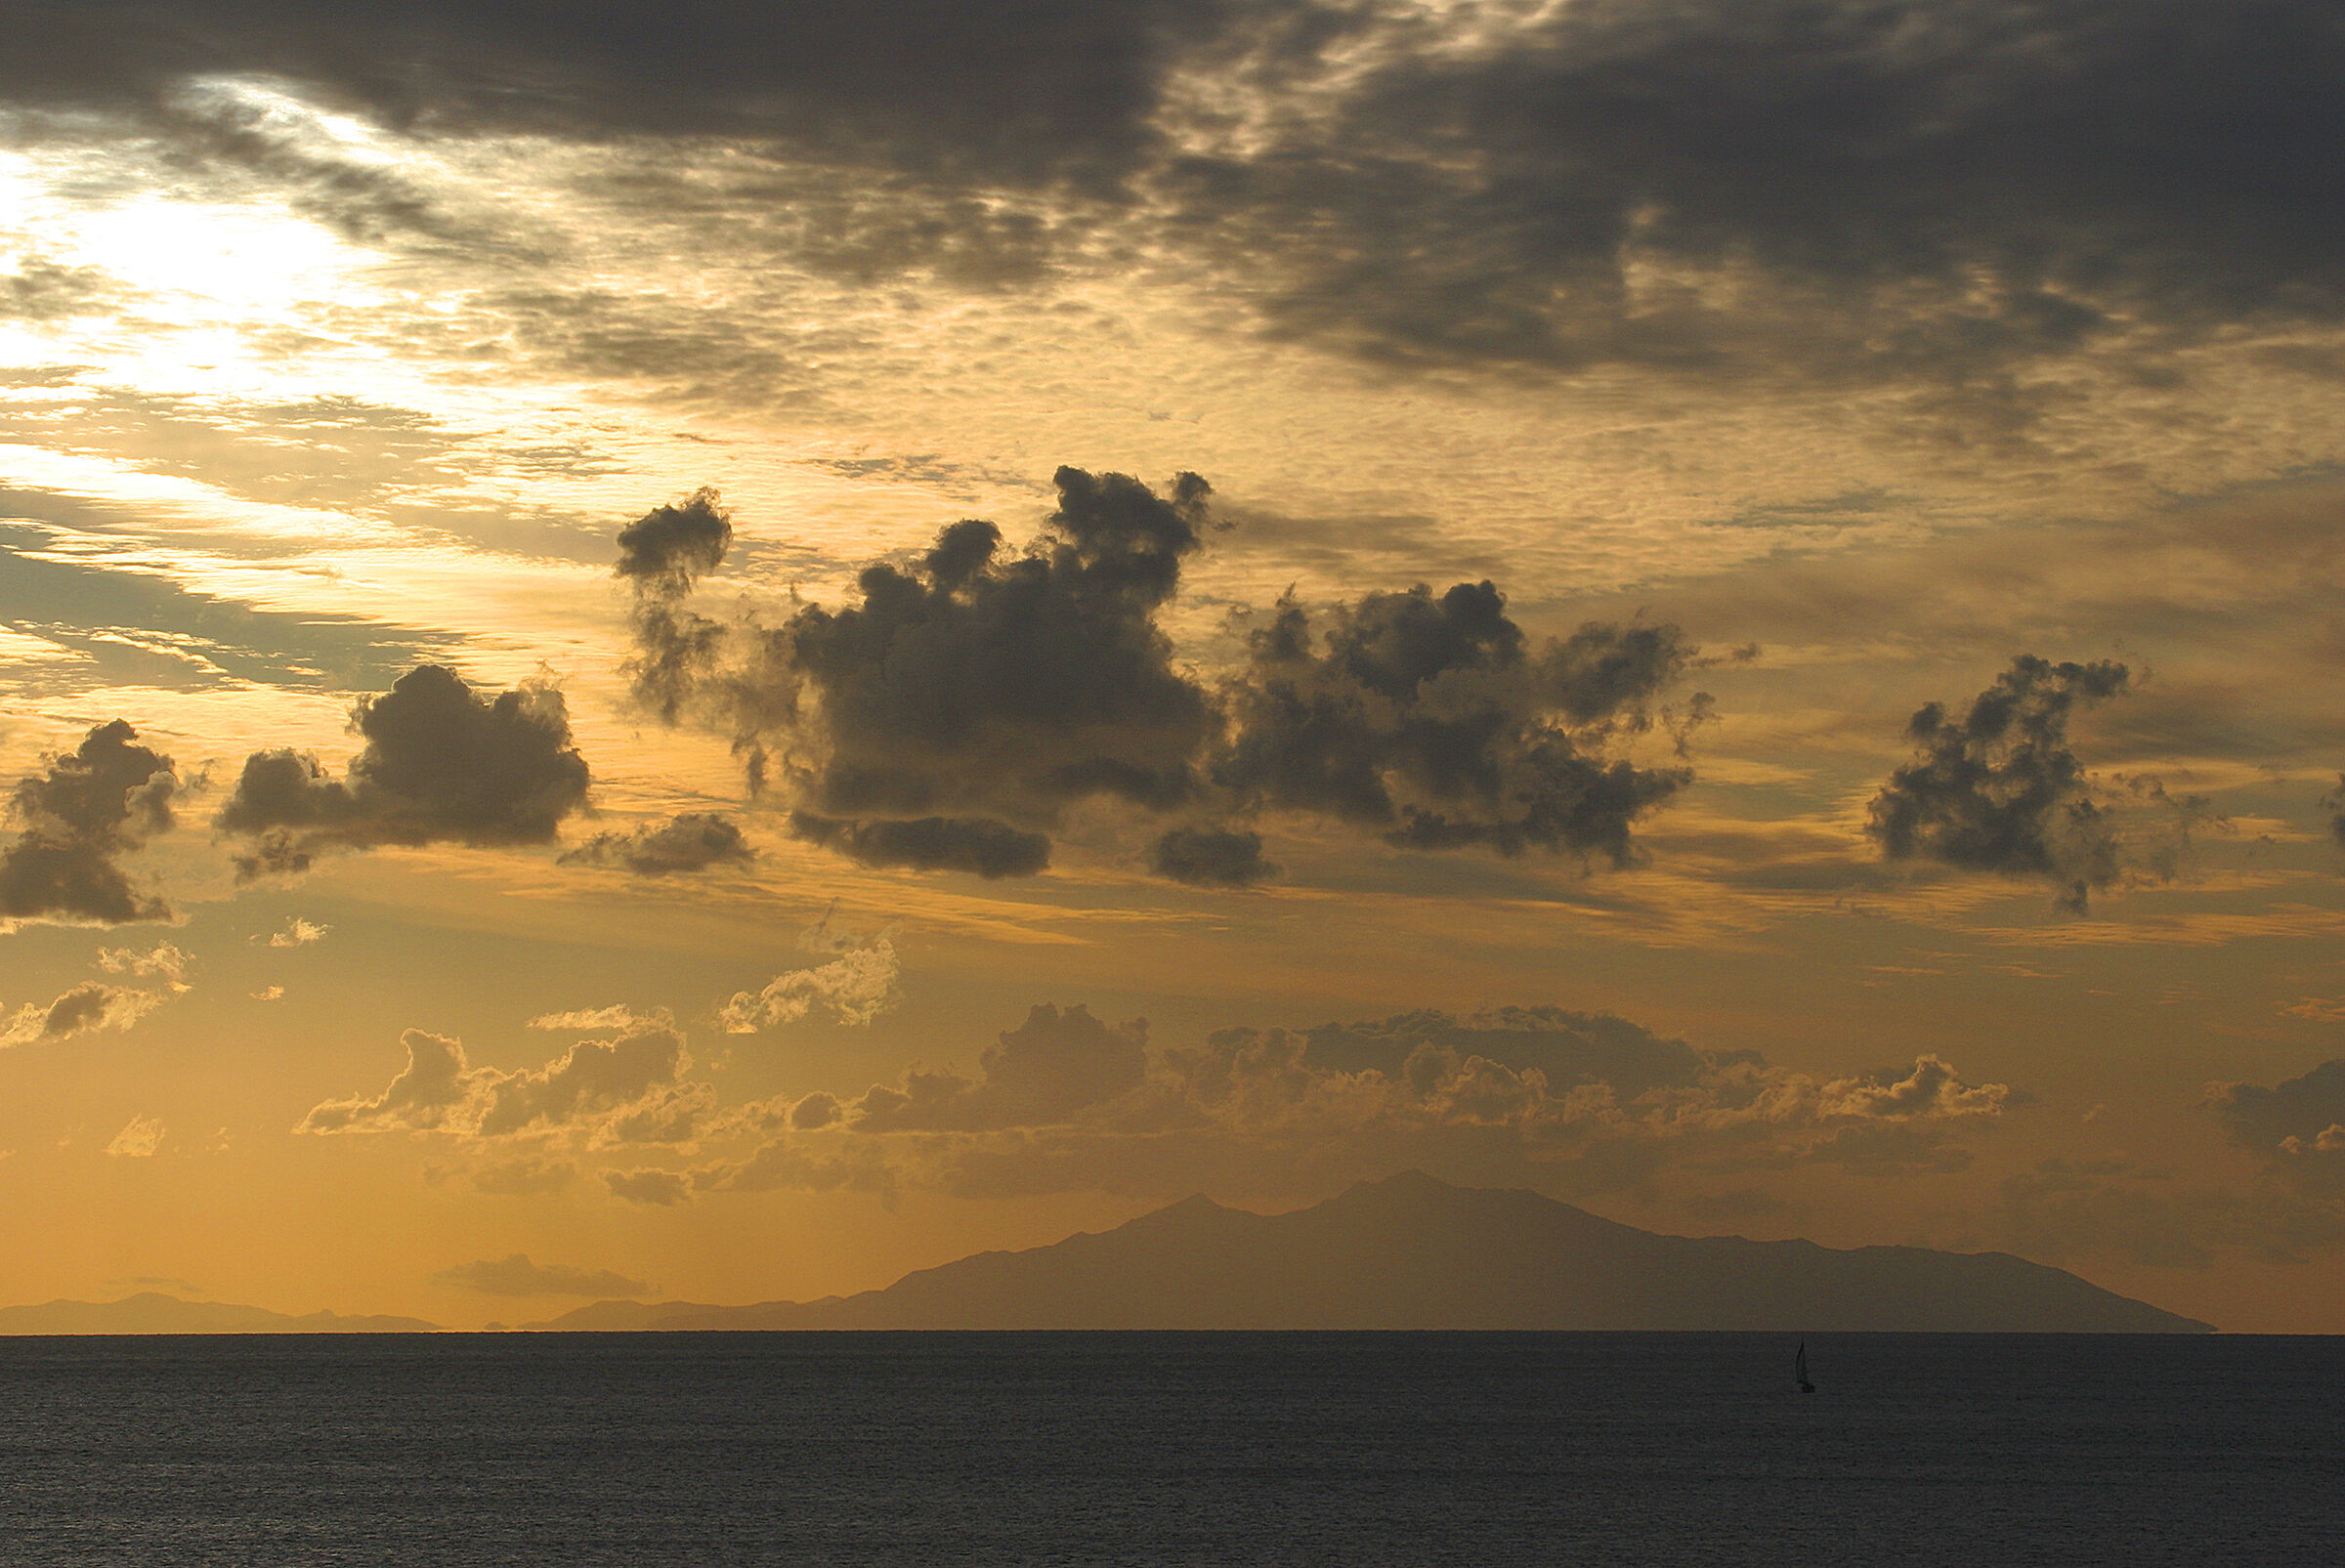 Island of Elba at dawn from Macinaggio - Corsica...